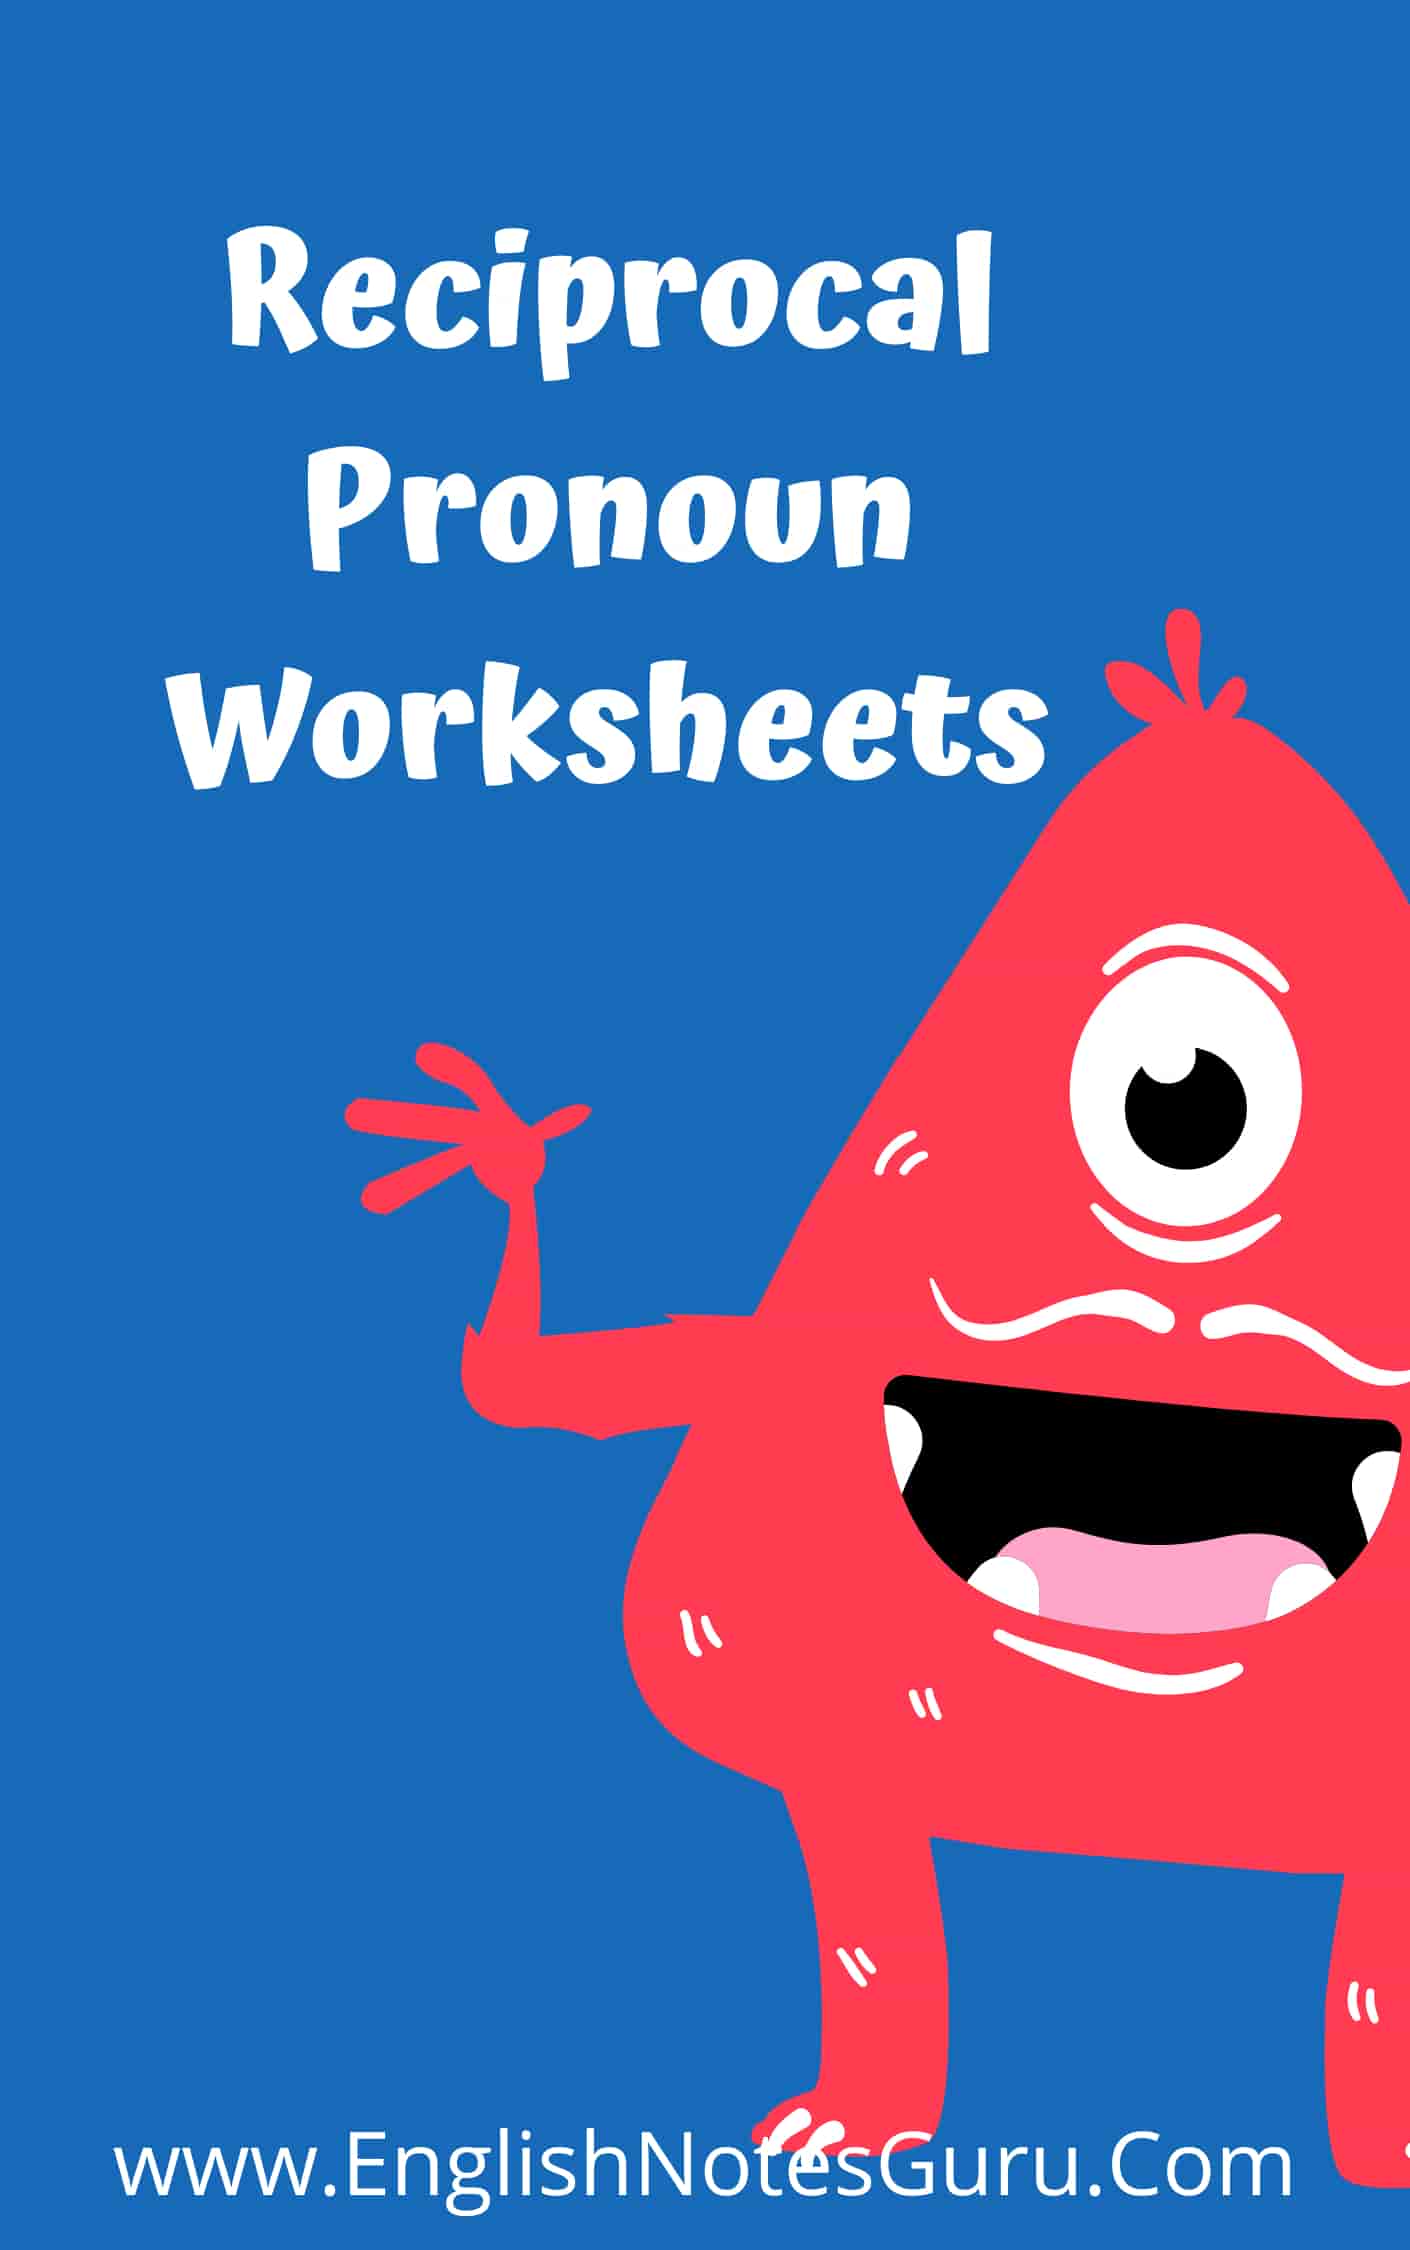 Reciprocal Pronoun Worksheets English Notes Guru